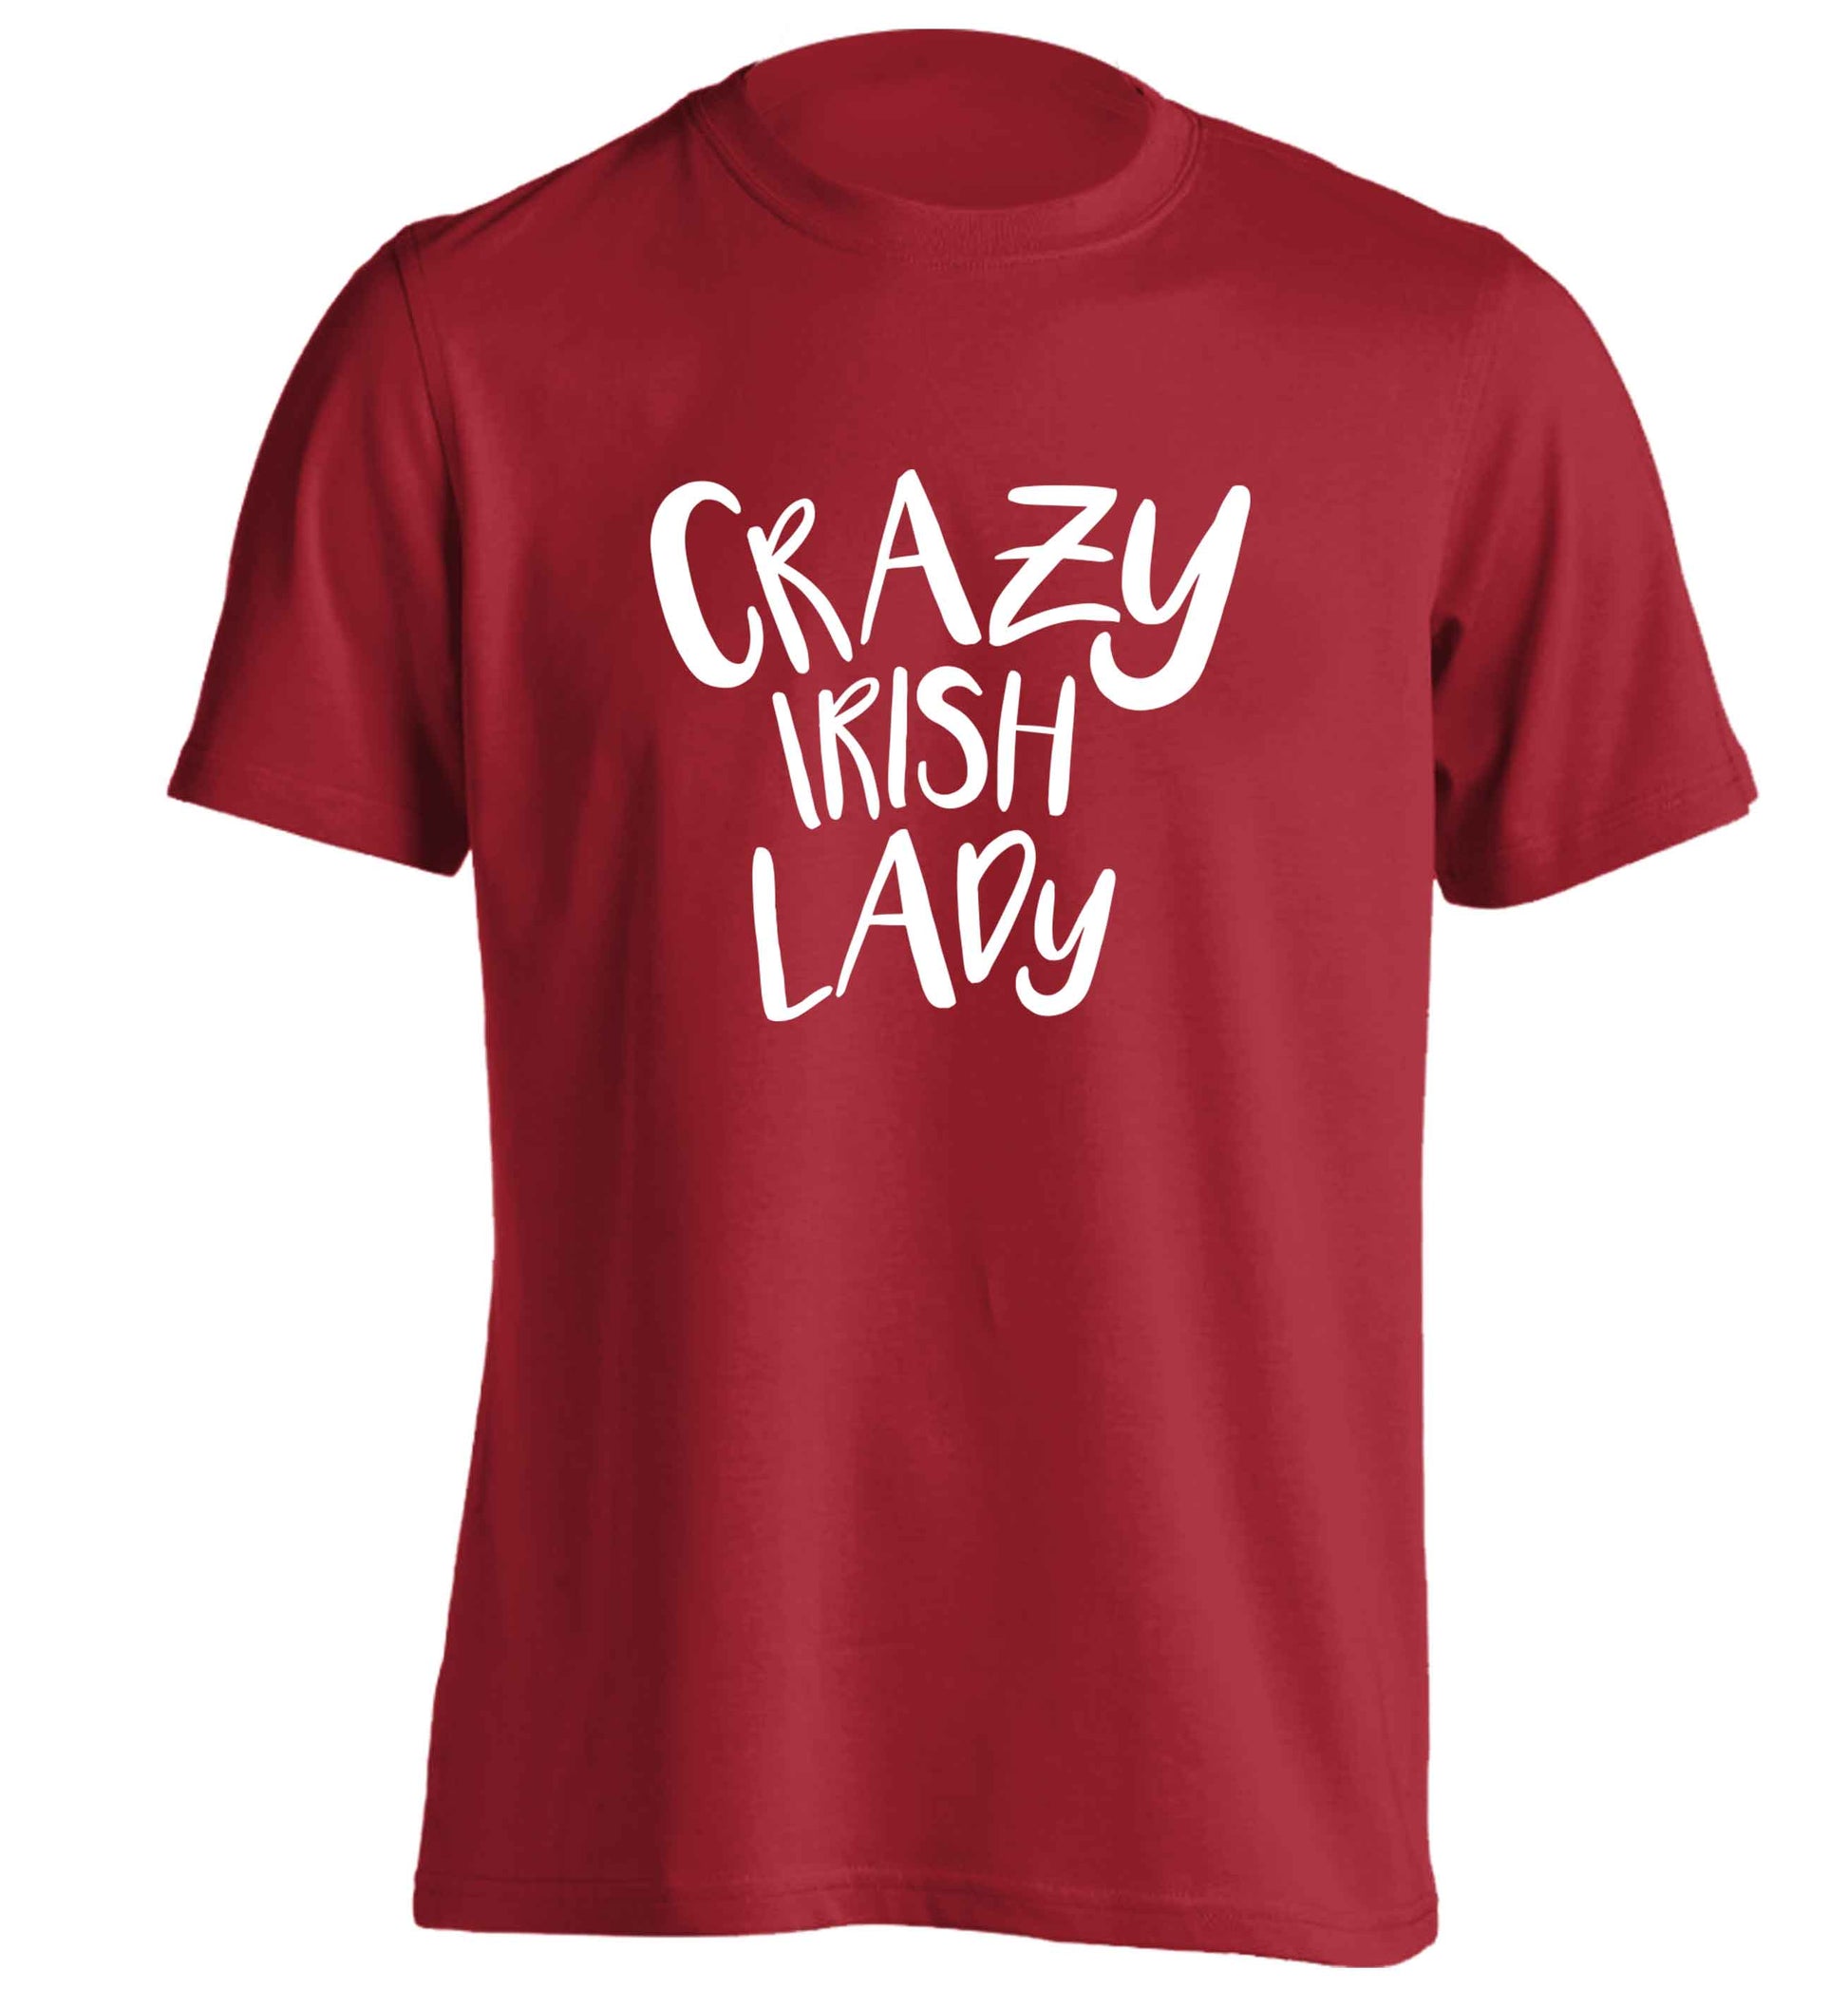 Crazy Irish lady adults unisex red Tshirt 2XL